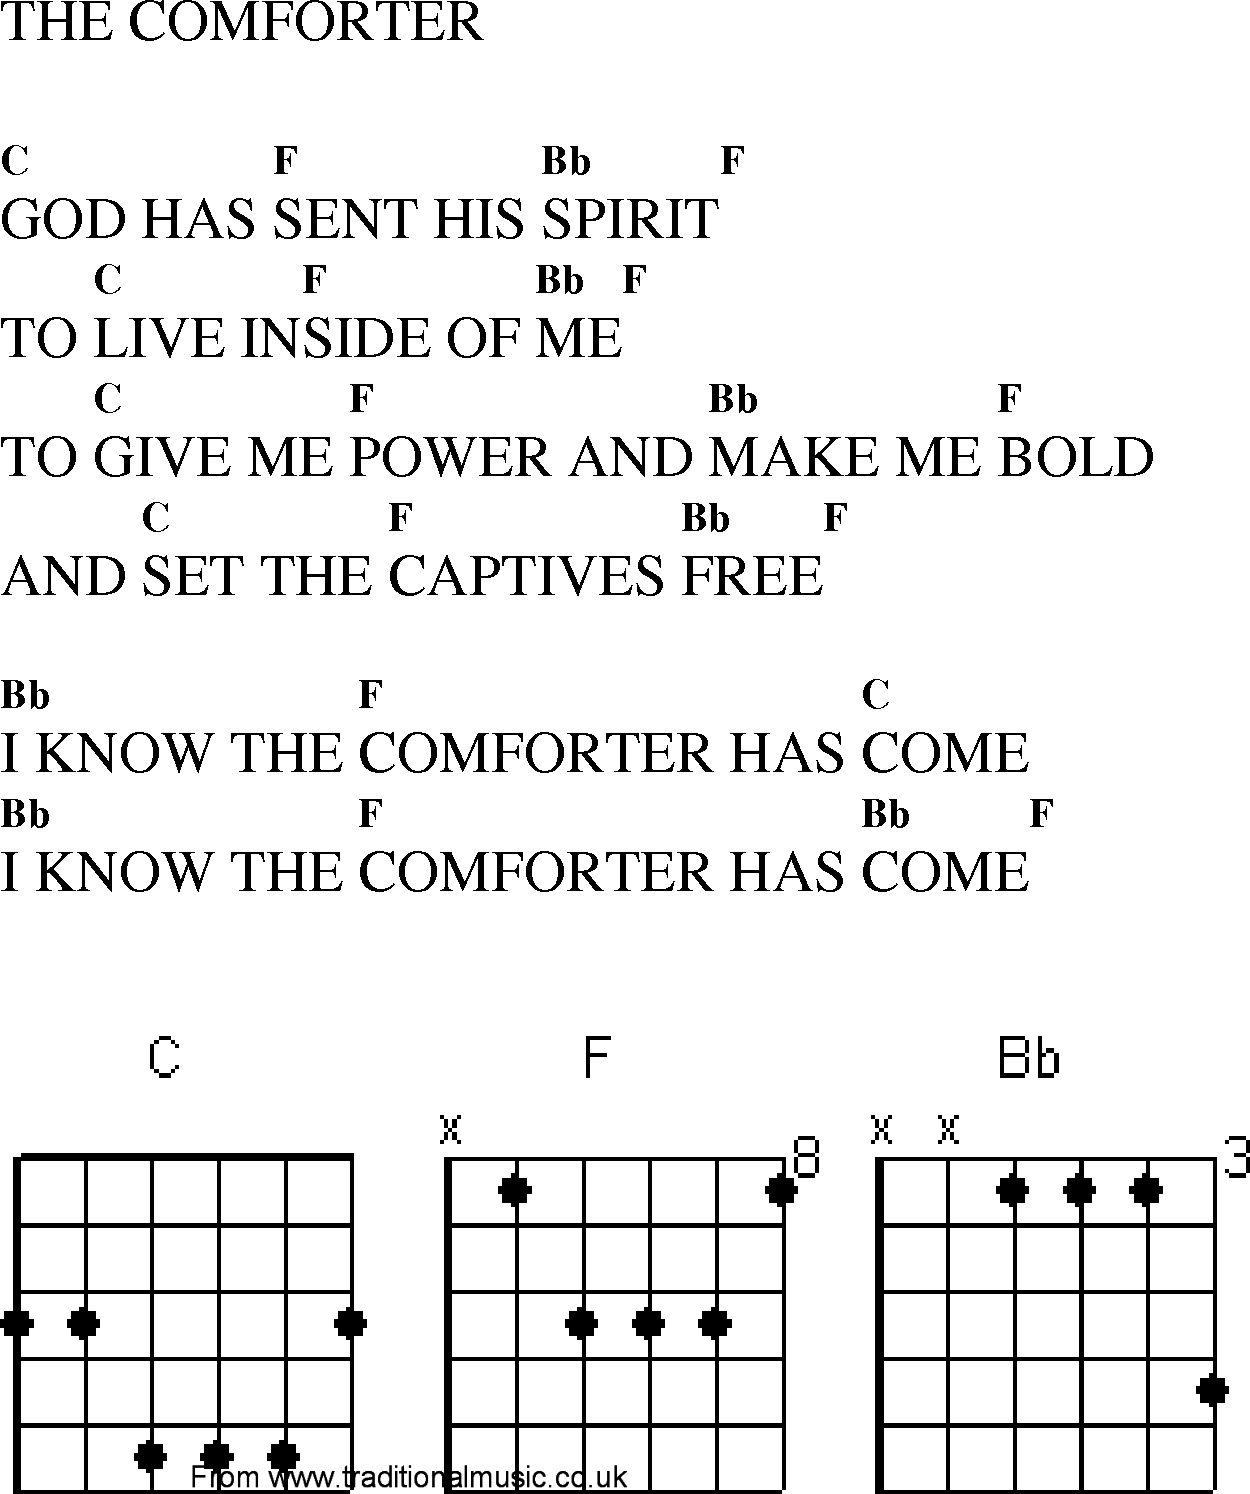 Gospel Song: the_comforter, lyrics and chords.